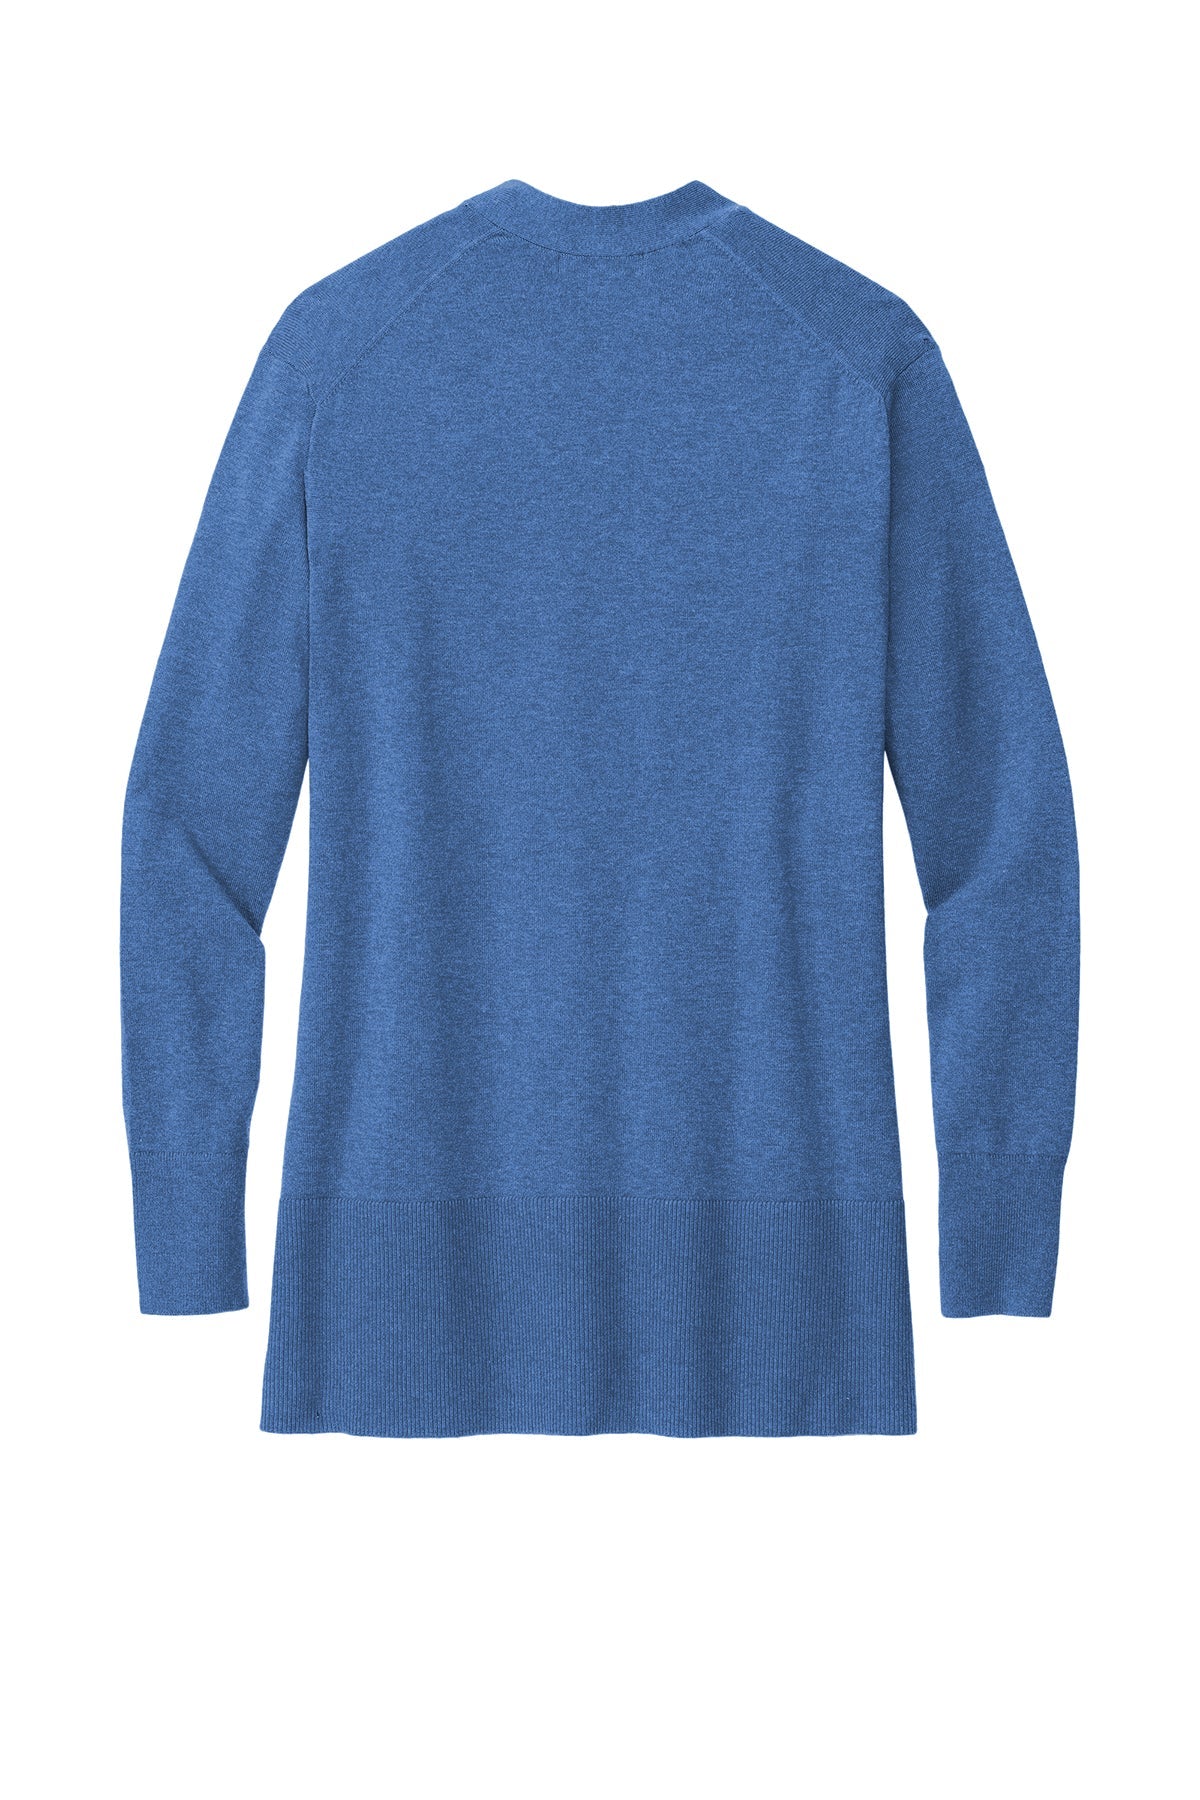 BB18403 Brooks Brothers® Women’s Cotton Stretch Long Cardigan Sweater